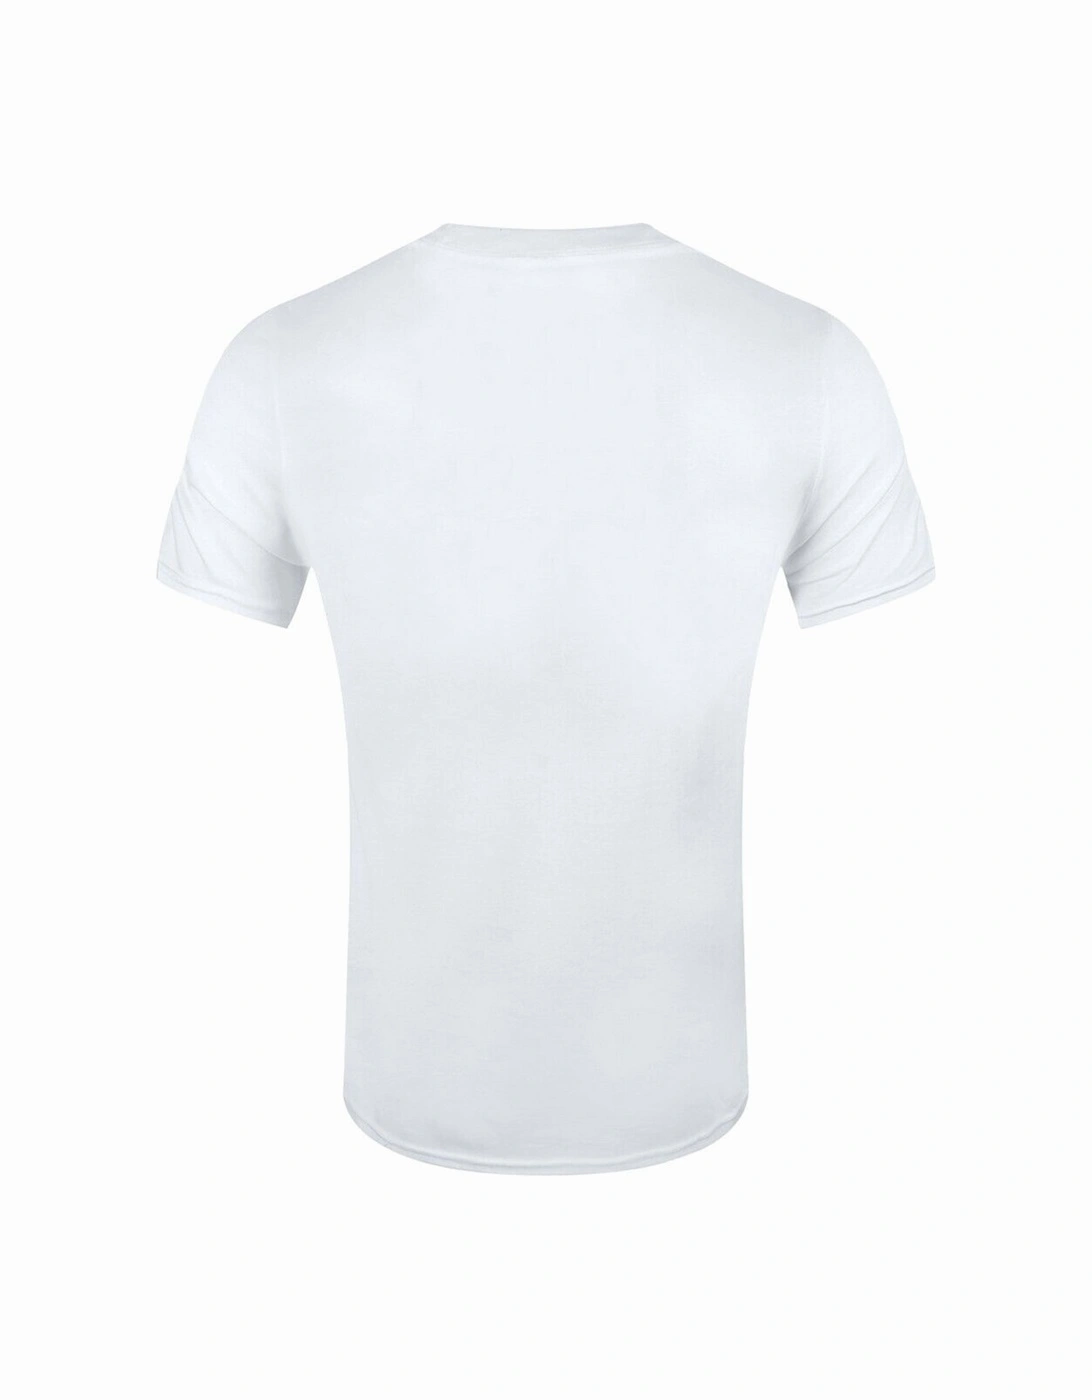 Unisex Adult Holographic Bolt T-Shirt